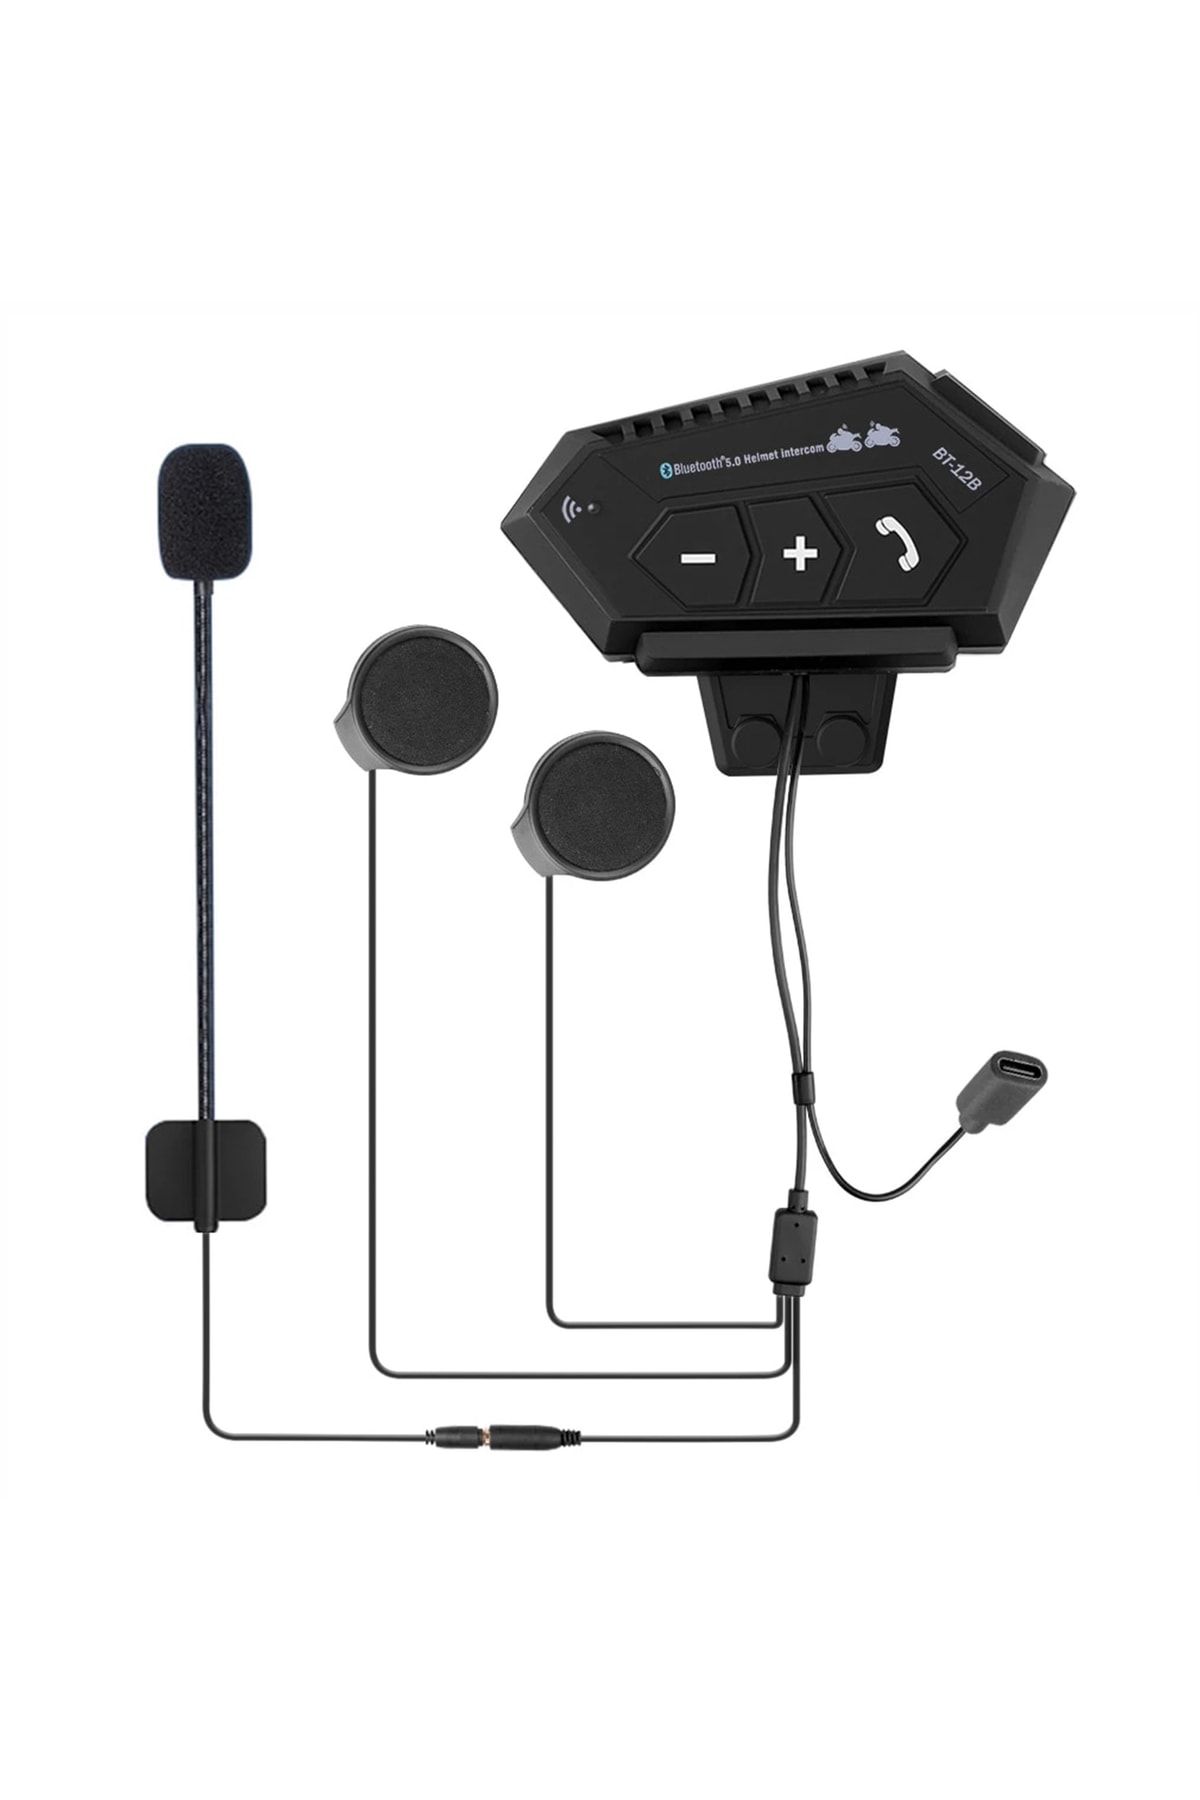 JUNGLEE Motosiklet Kask Bluetooth Kulaklık Interkom Su Geçirmez Kablosuz Mikrofonlu Çift Kulaklık Eşleşme